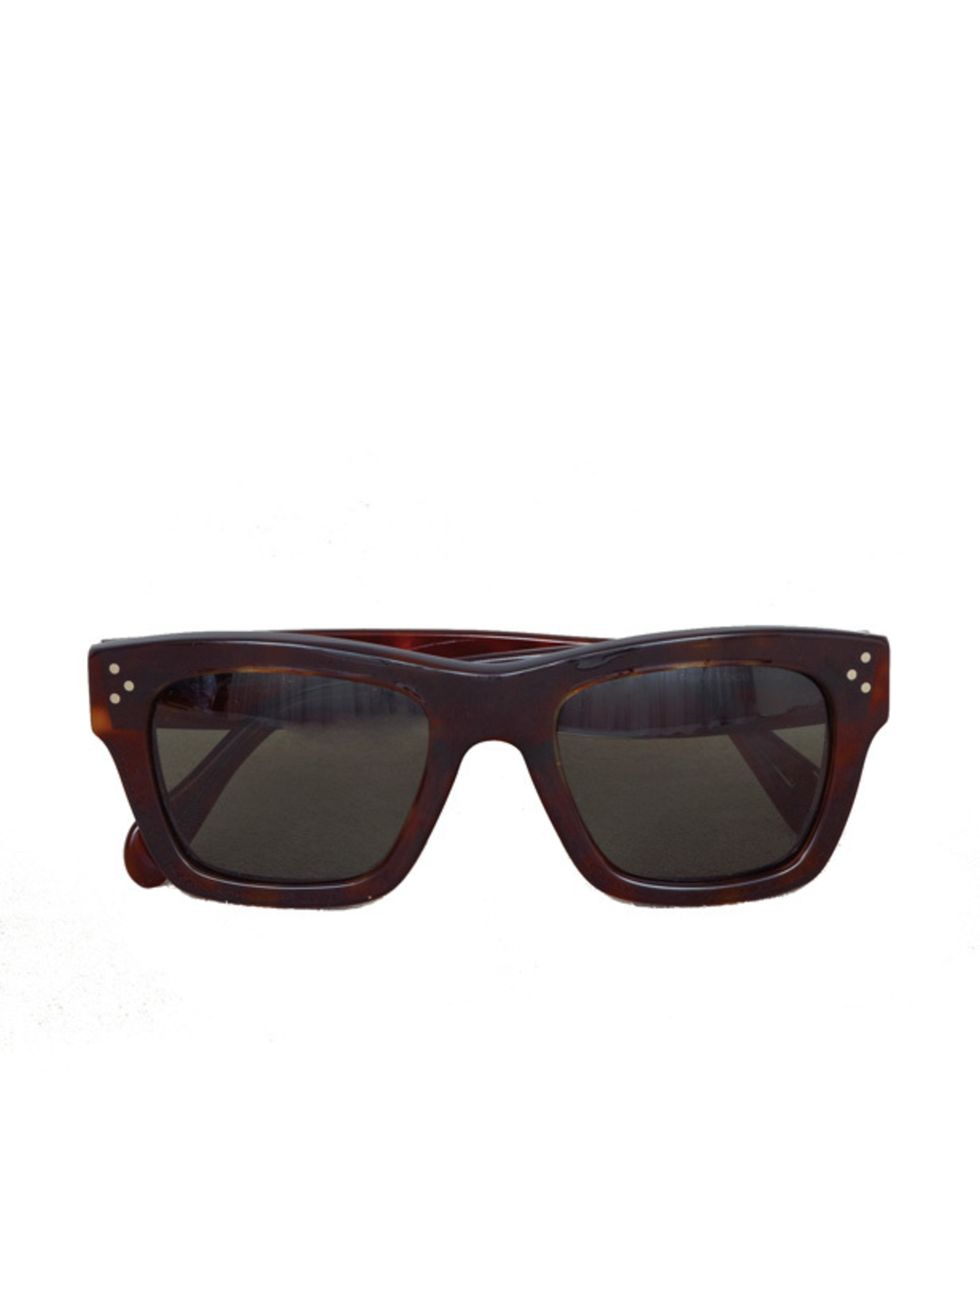 <p>Tortoiseshell sunglasses, £184, by Celine at Selfridges (0800 123 400)</p>